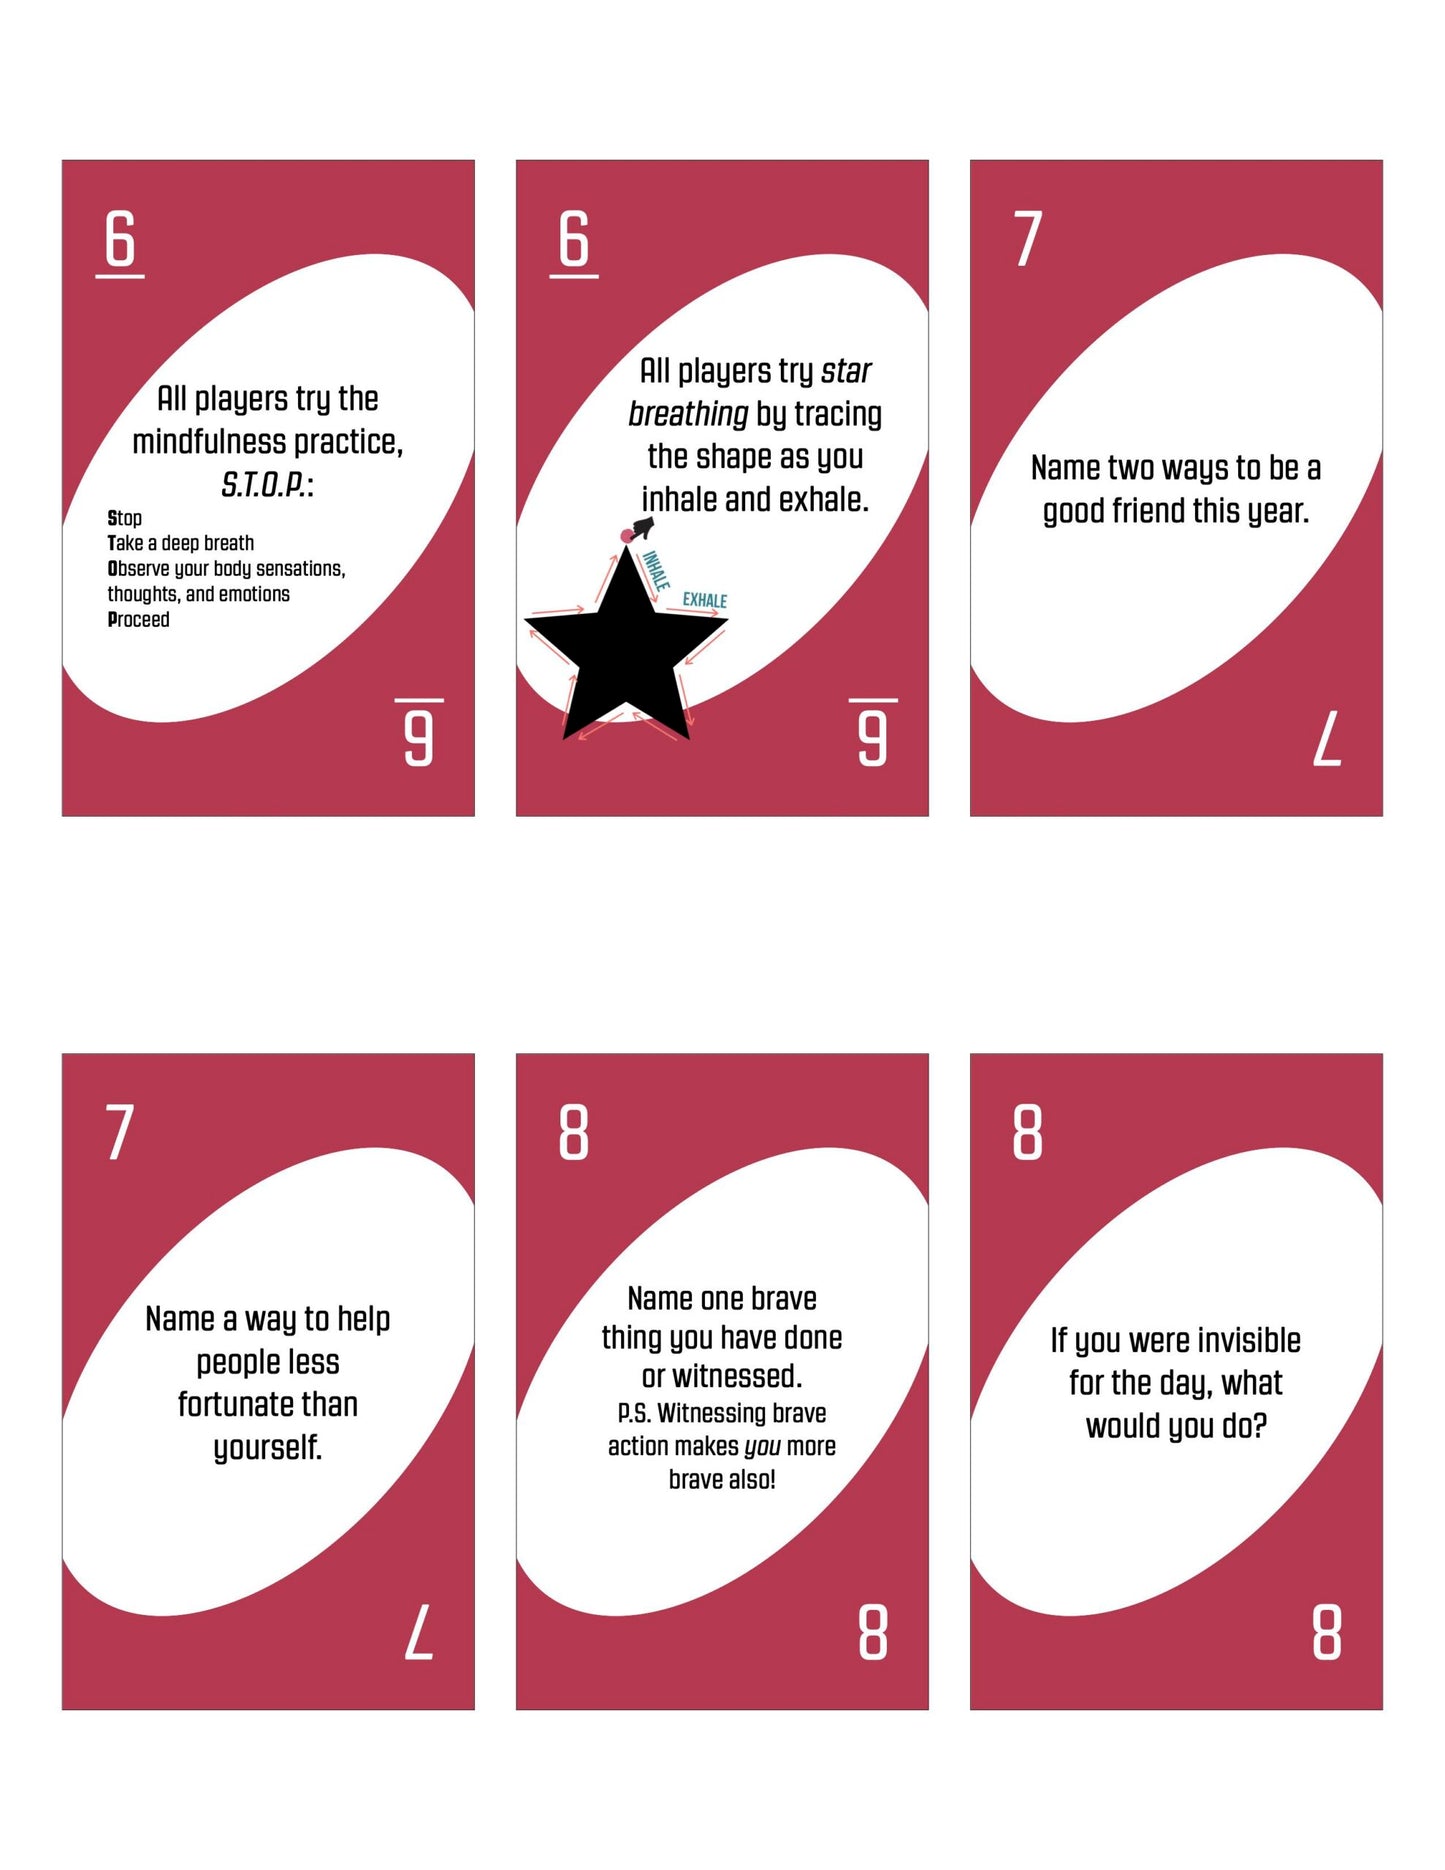 Mind Up Card Game (Downloadable PDF)